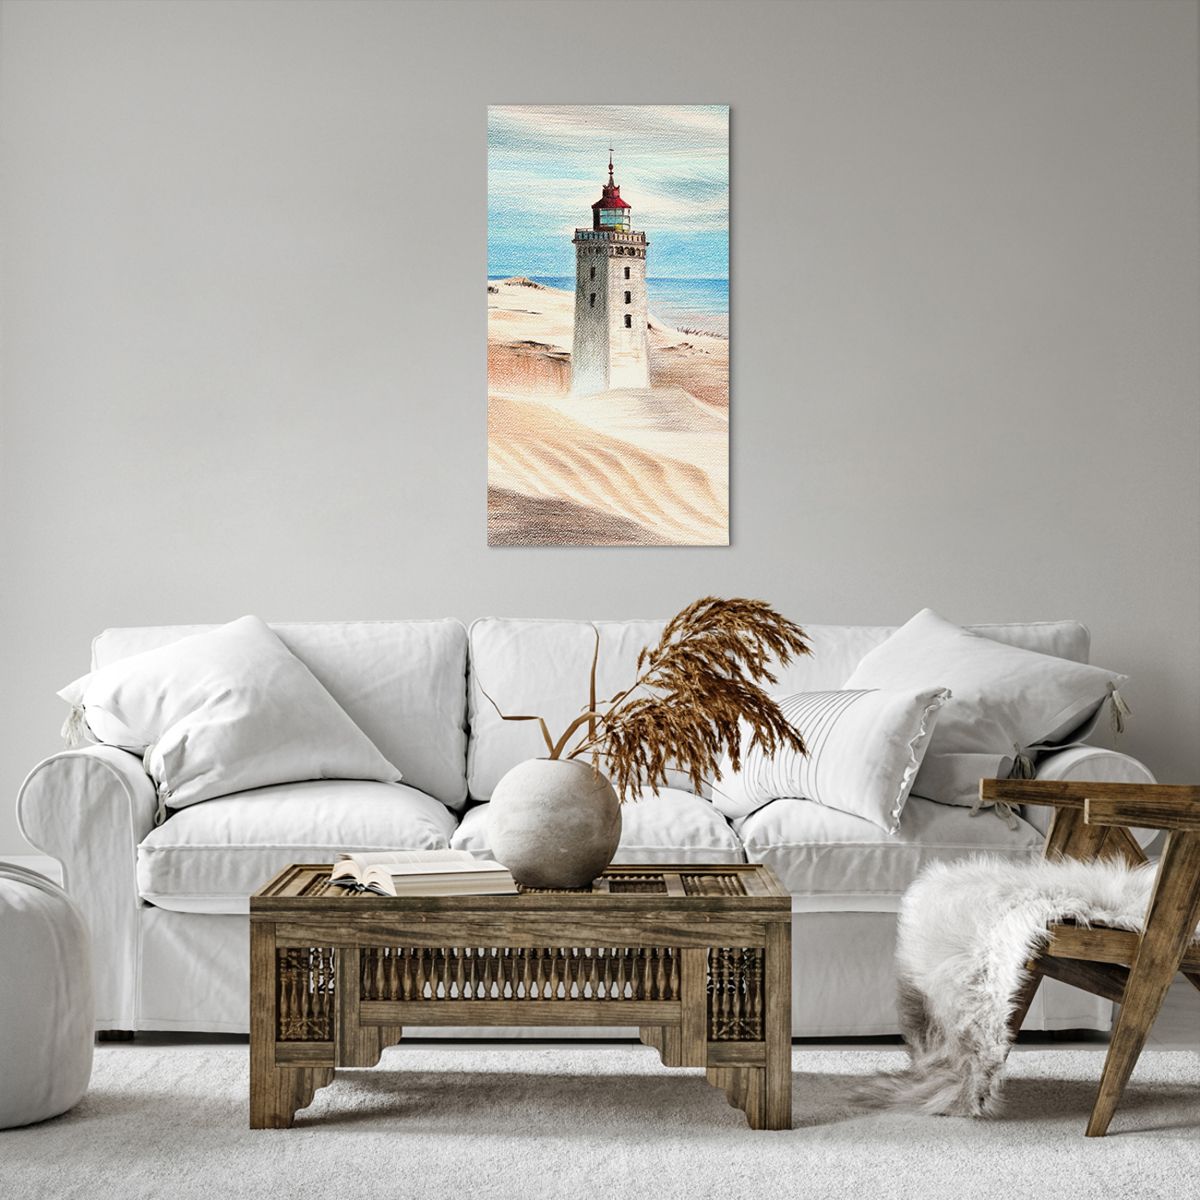 Bild auf Leinwand Leuchtturm, Bild auf Leinwand Strand, Bild auf Leinwand Meer, Bild auf Leinwand Düne, Bild auf Leinwand Malerei